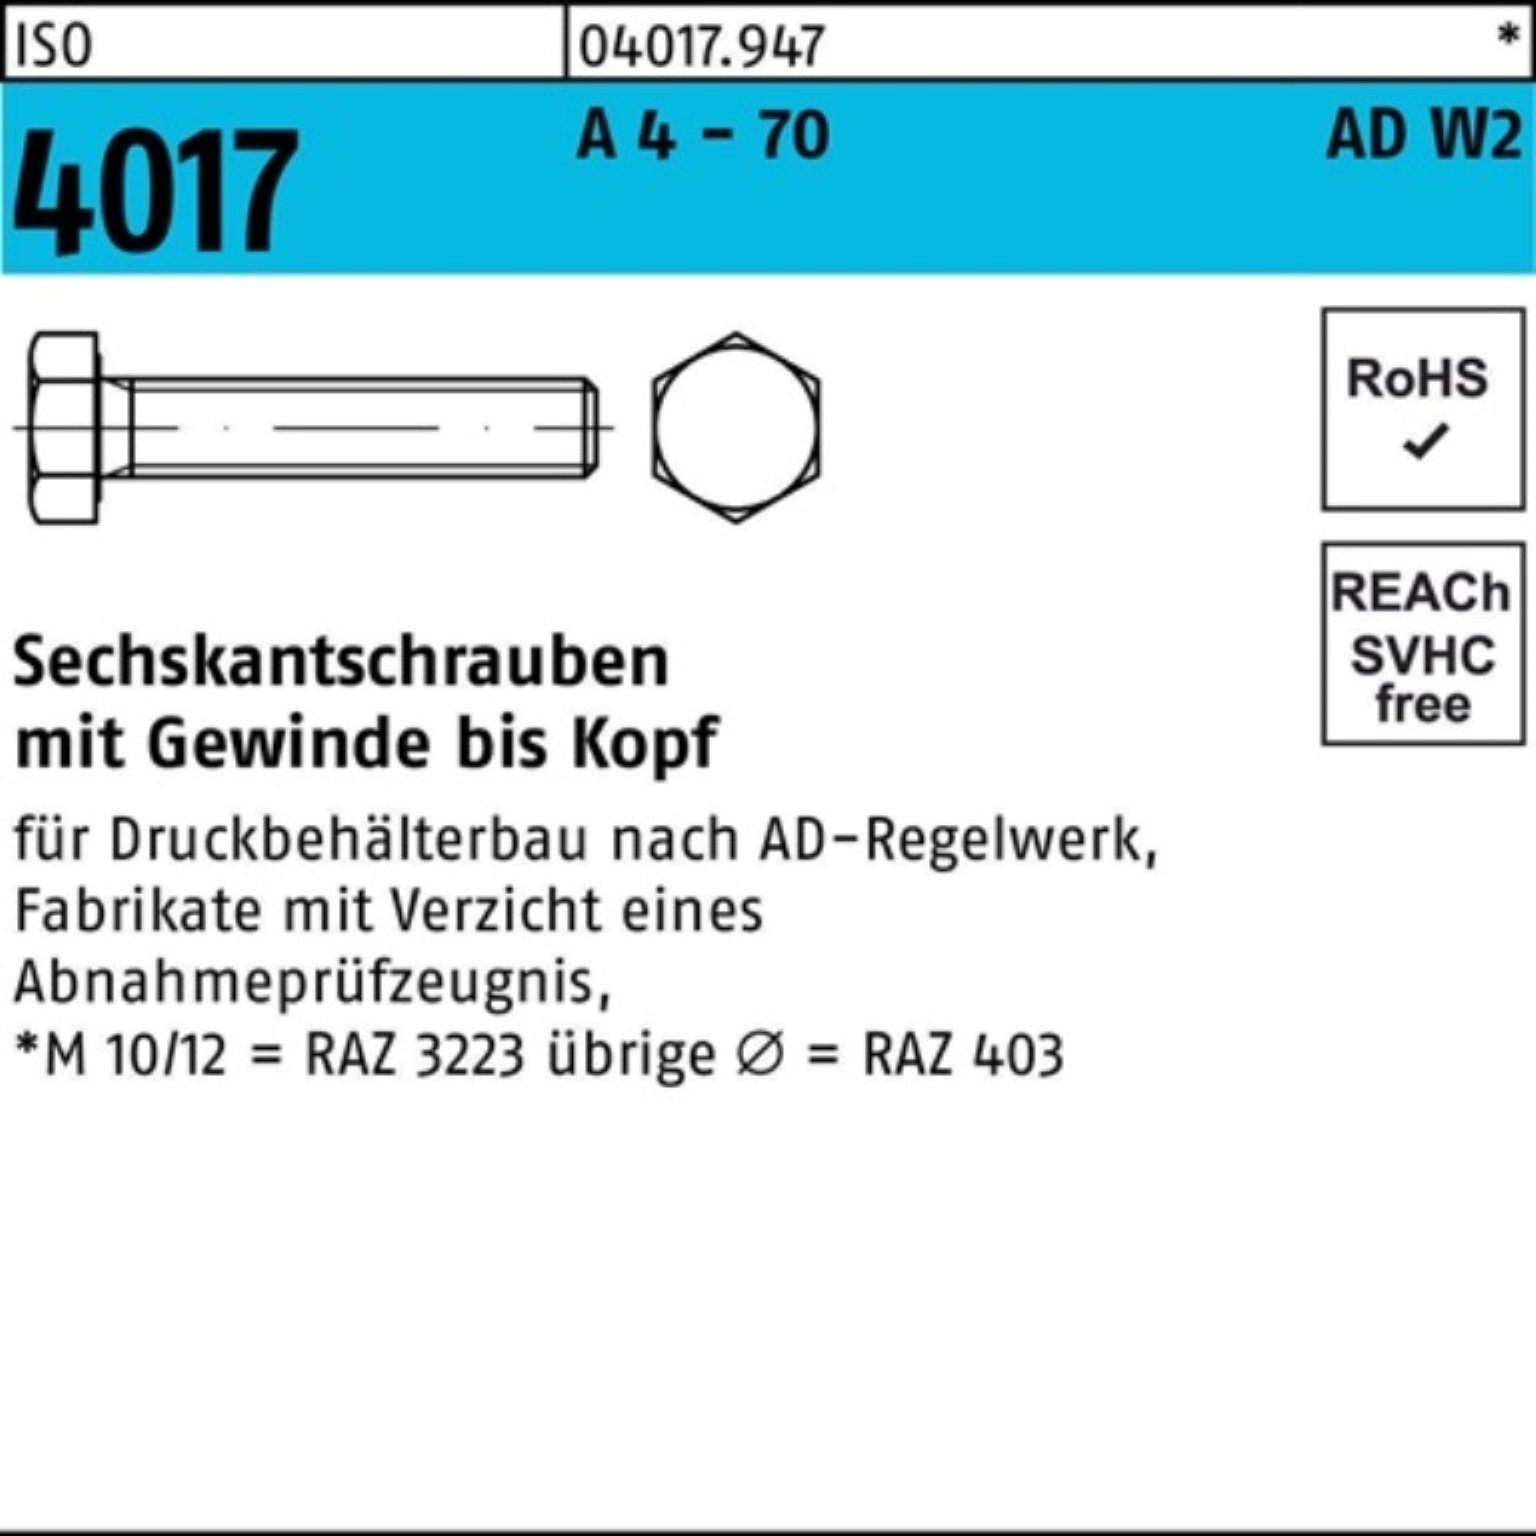 Bufab Sechskantschraube 100er Pack Sechskantschraube ISO 4017 VG M20x 75 A 4 - 70 AD-W2 25 St